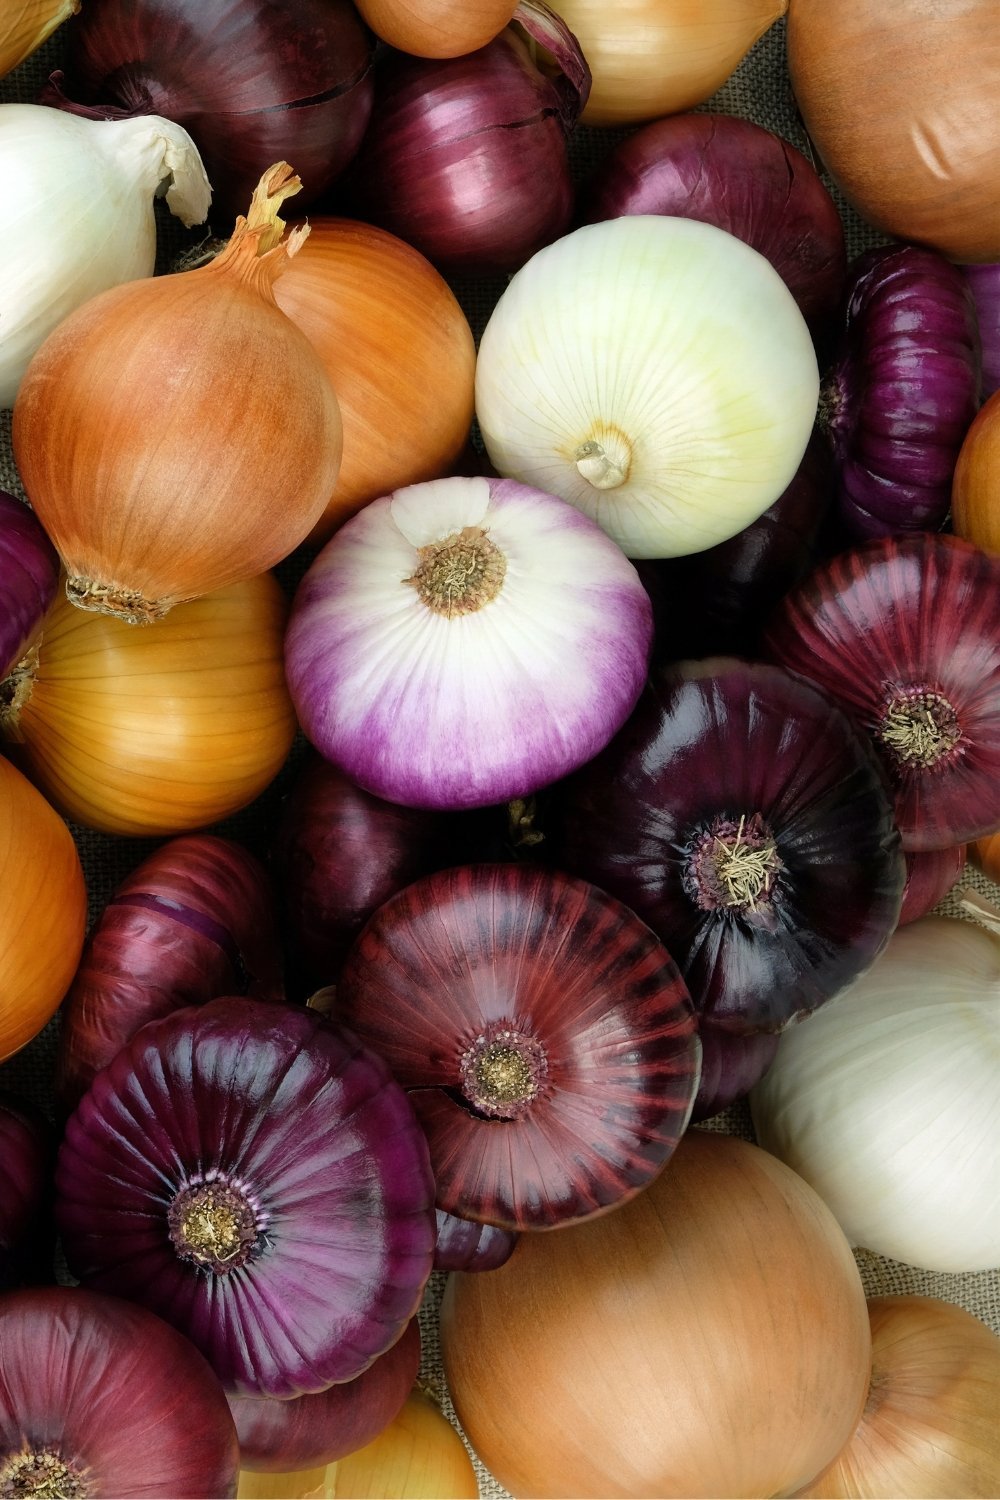 Many onion varieties